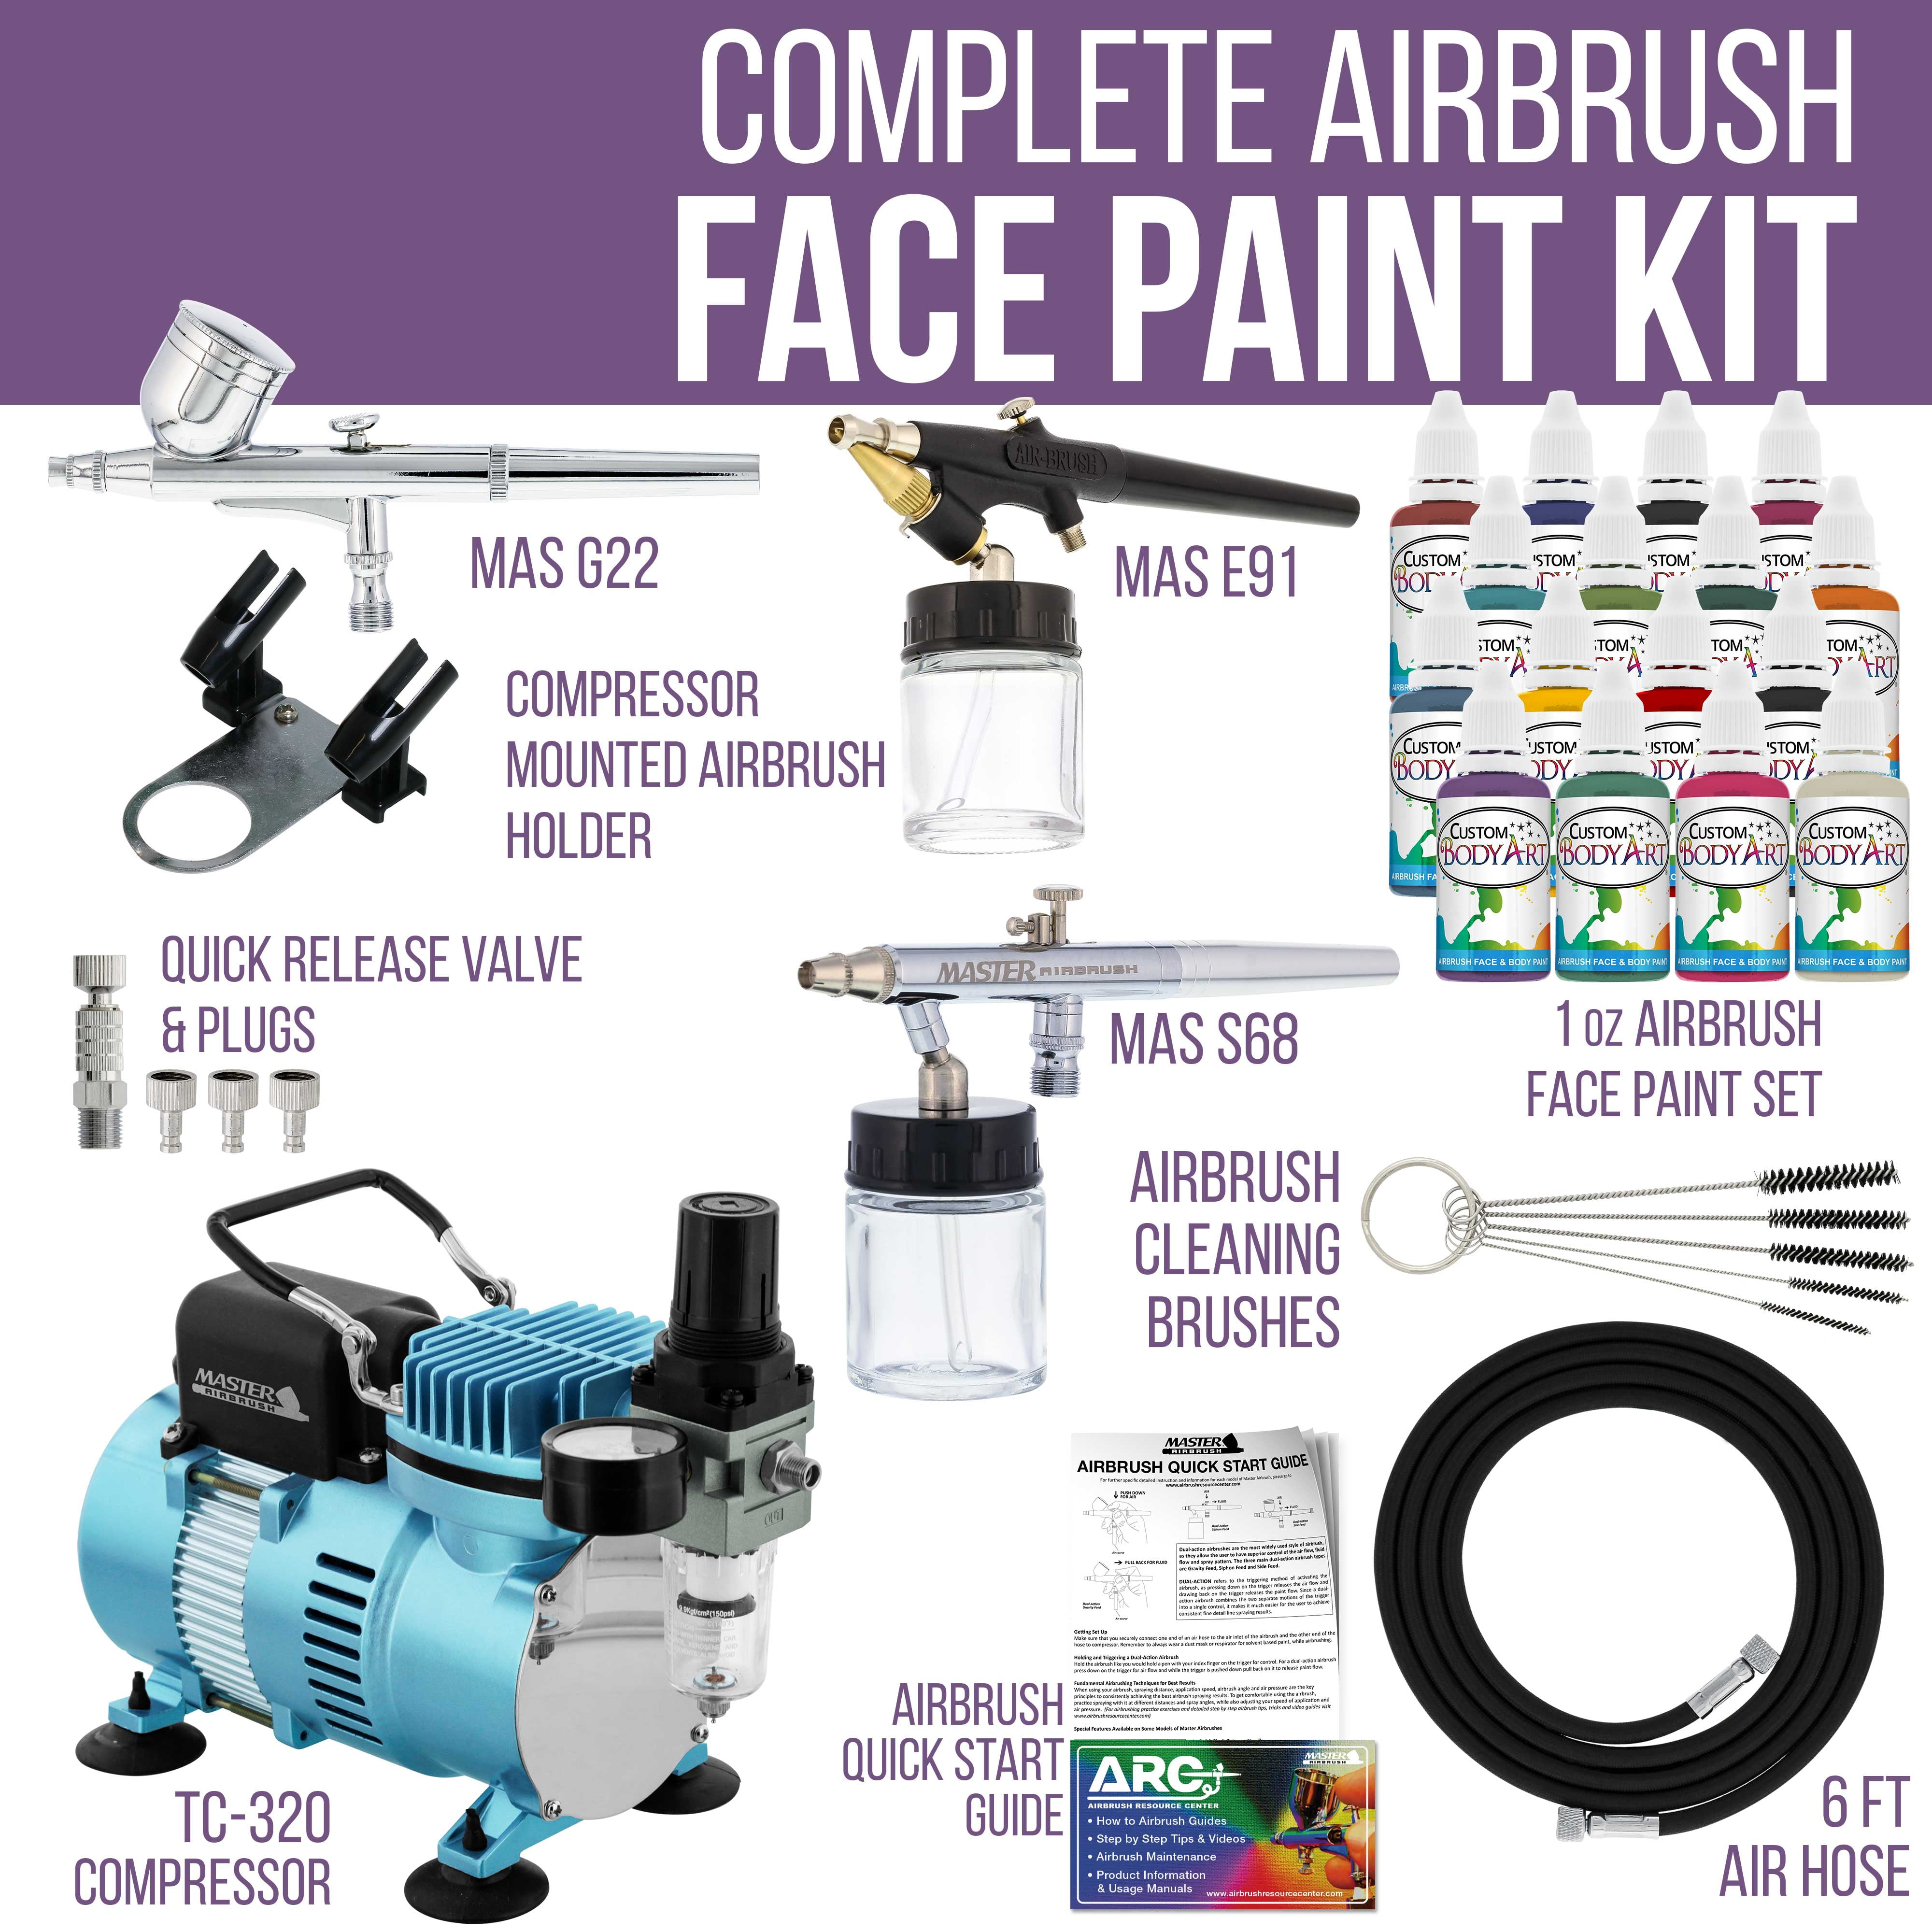 ASH AIRBRUSH PAINT – ModelersDP Airbrush Paint